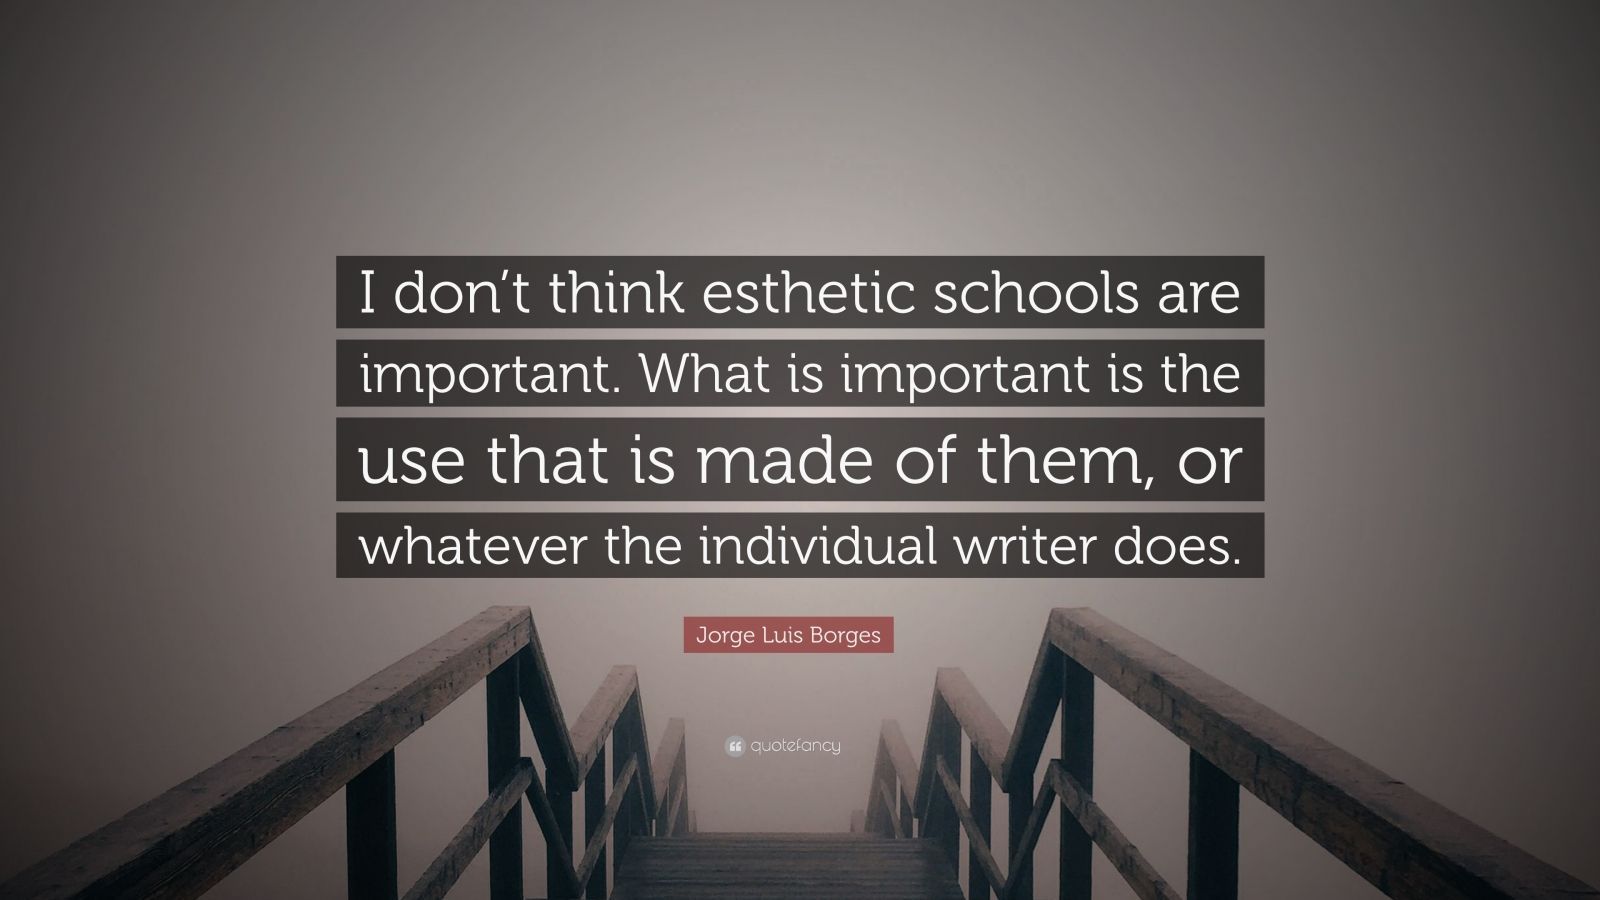 Jorge Luis Borges Quote: “I don't think esthetic schools are